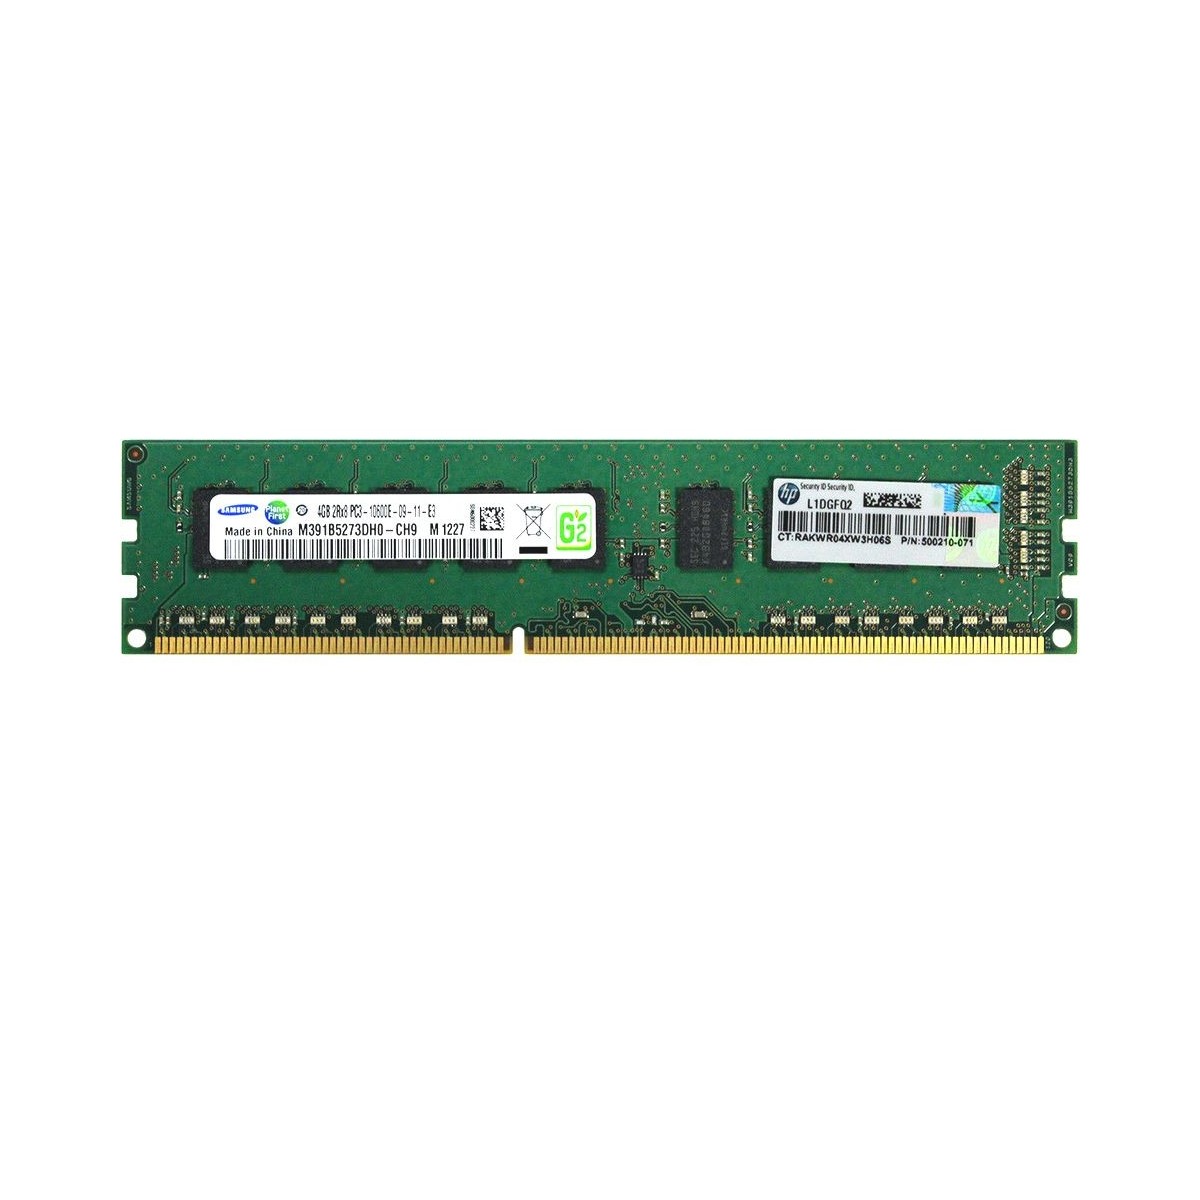 PAMIEC HP 4GB DDR3 PC3-10600E 2Rx8 500210-071